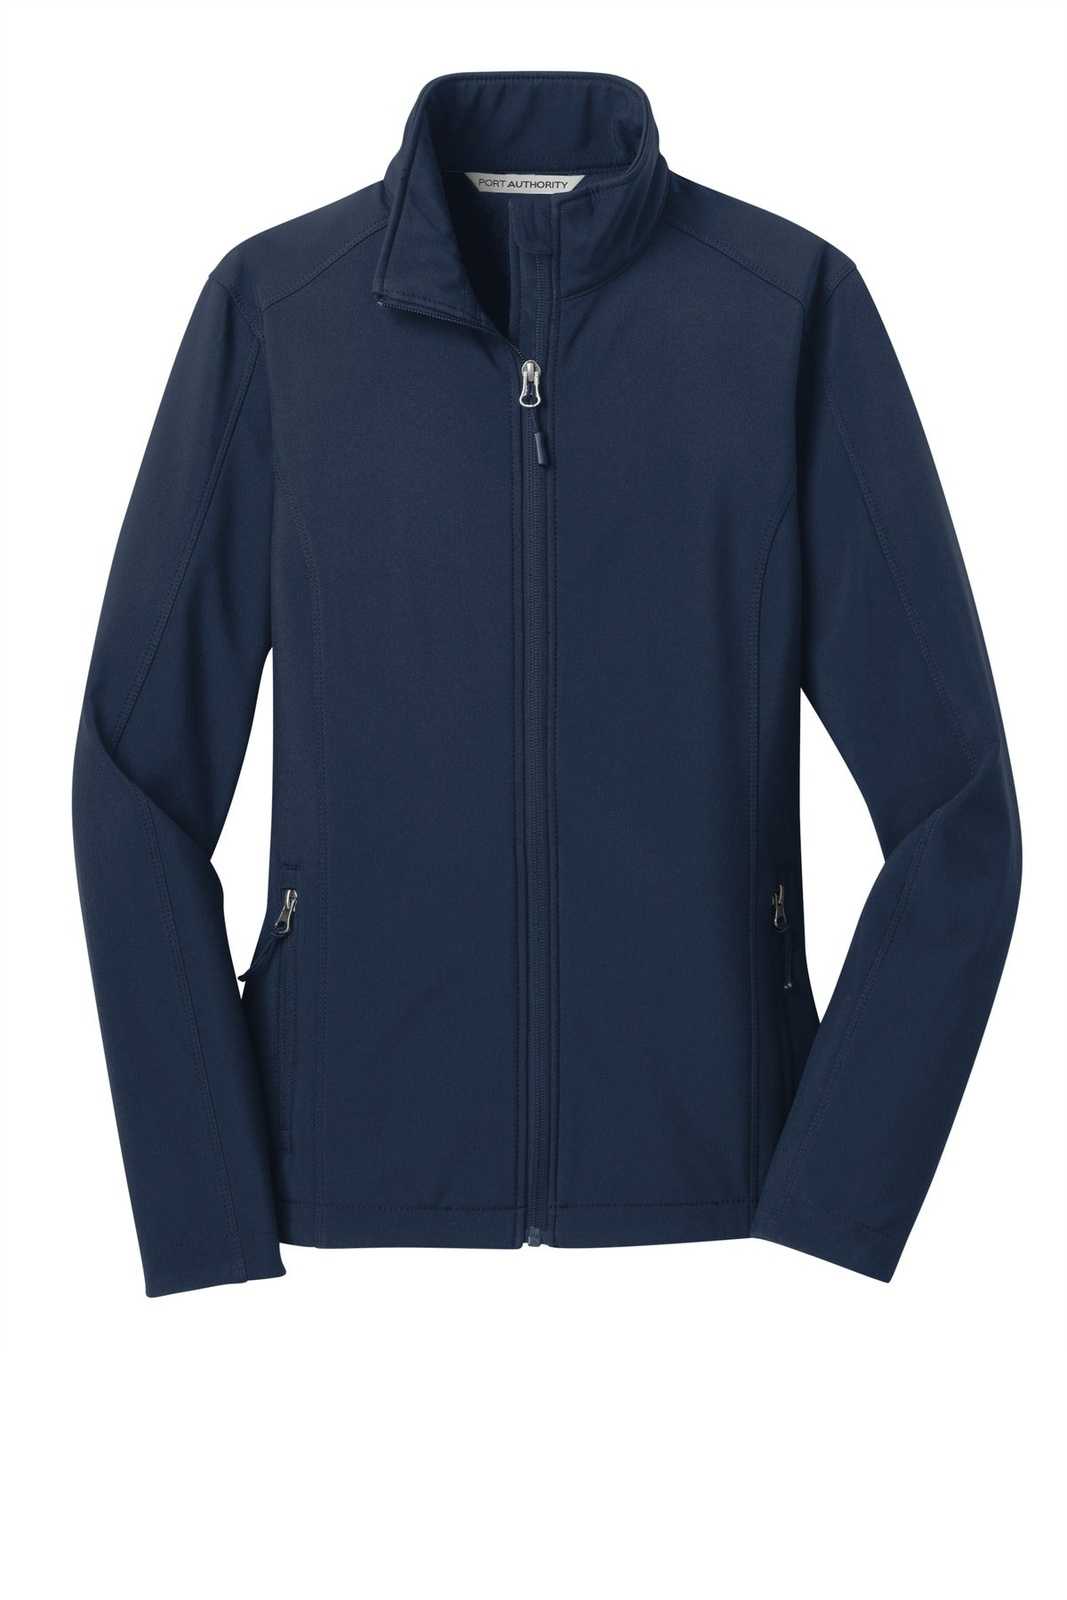 Port Authority L317 Ladies Core Soft Shell Jacket - Dress Blue Navy - HIT a Double - 5